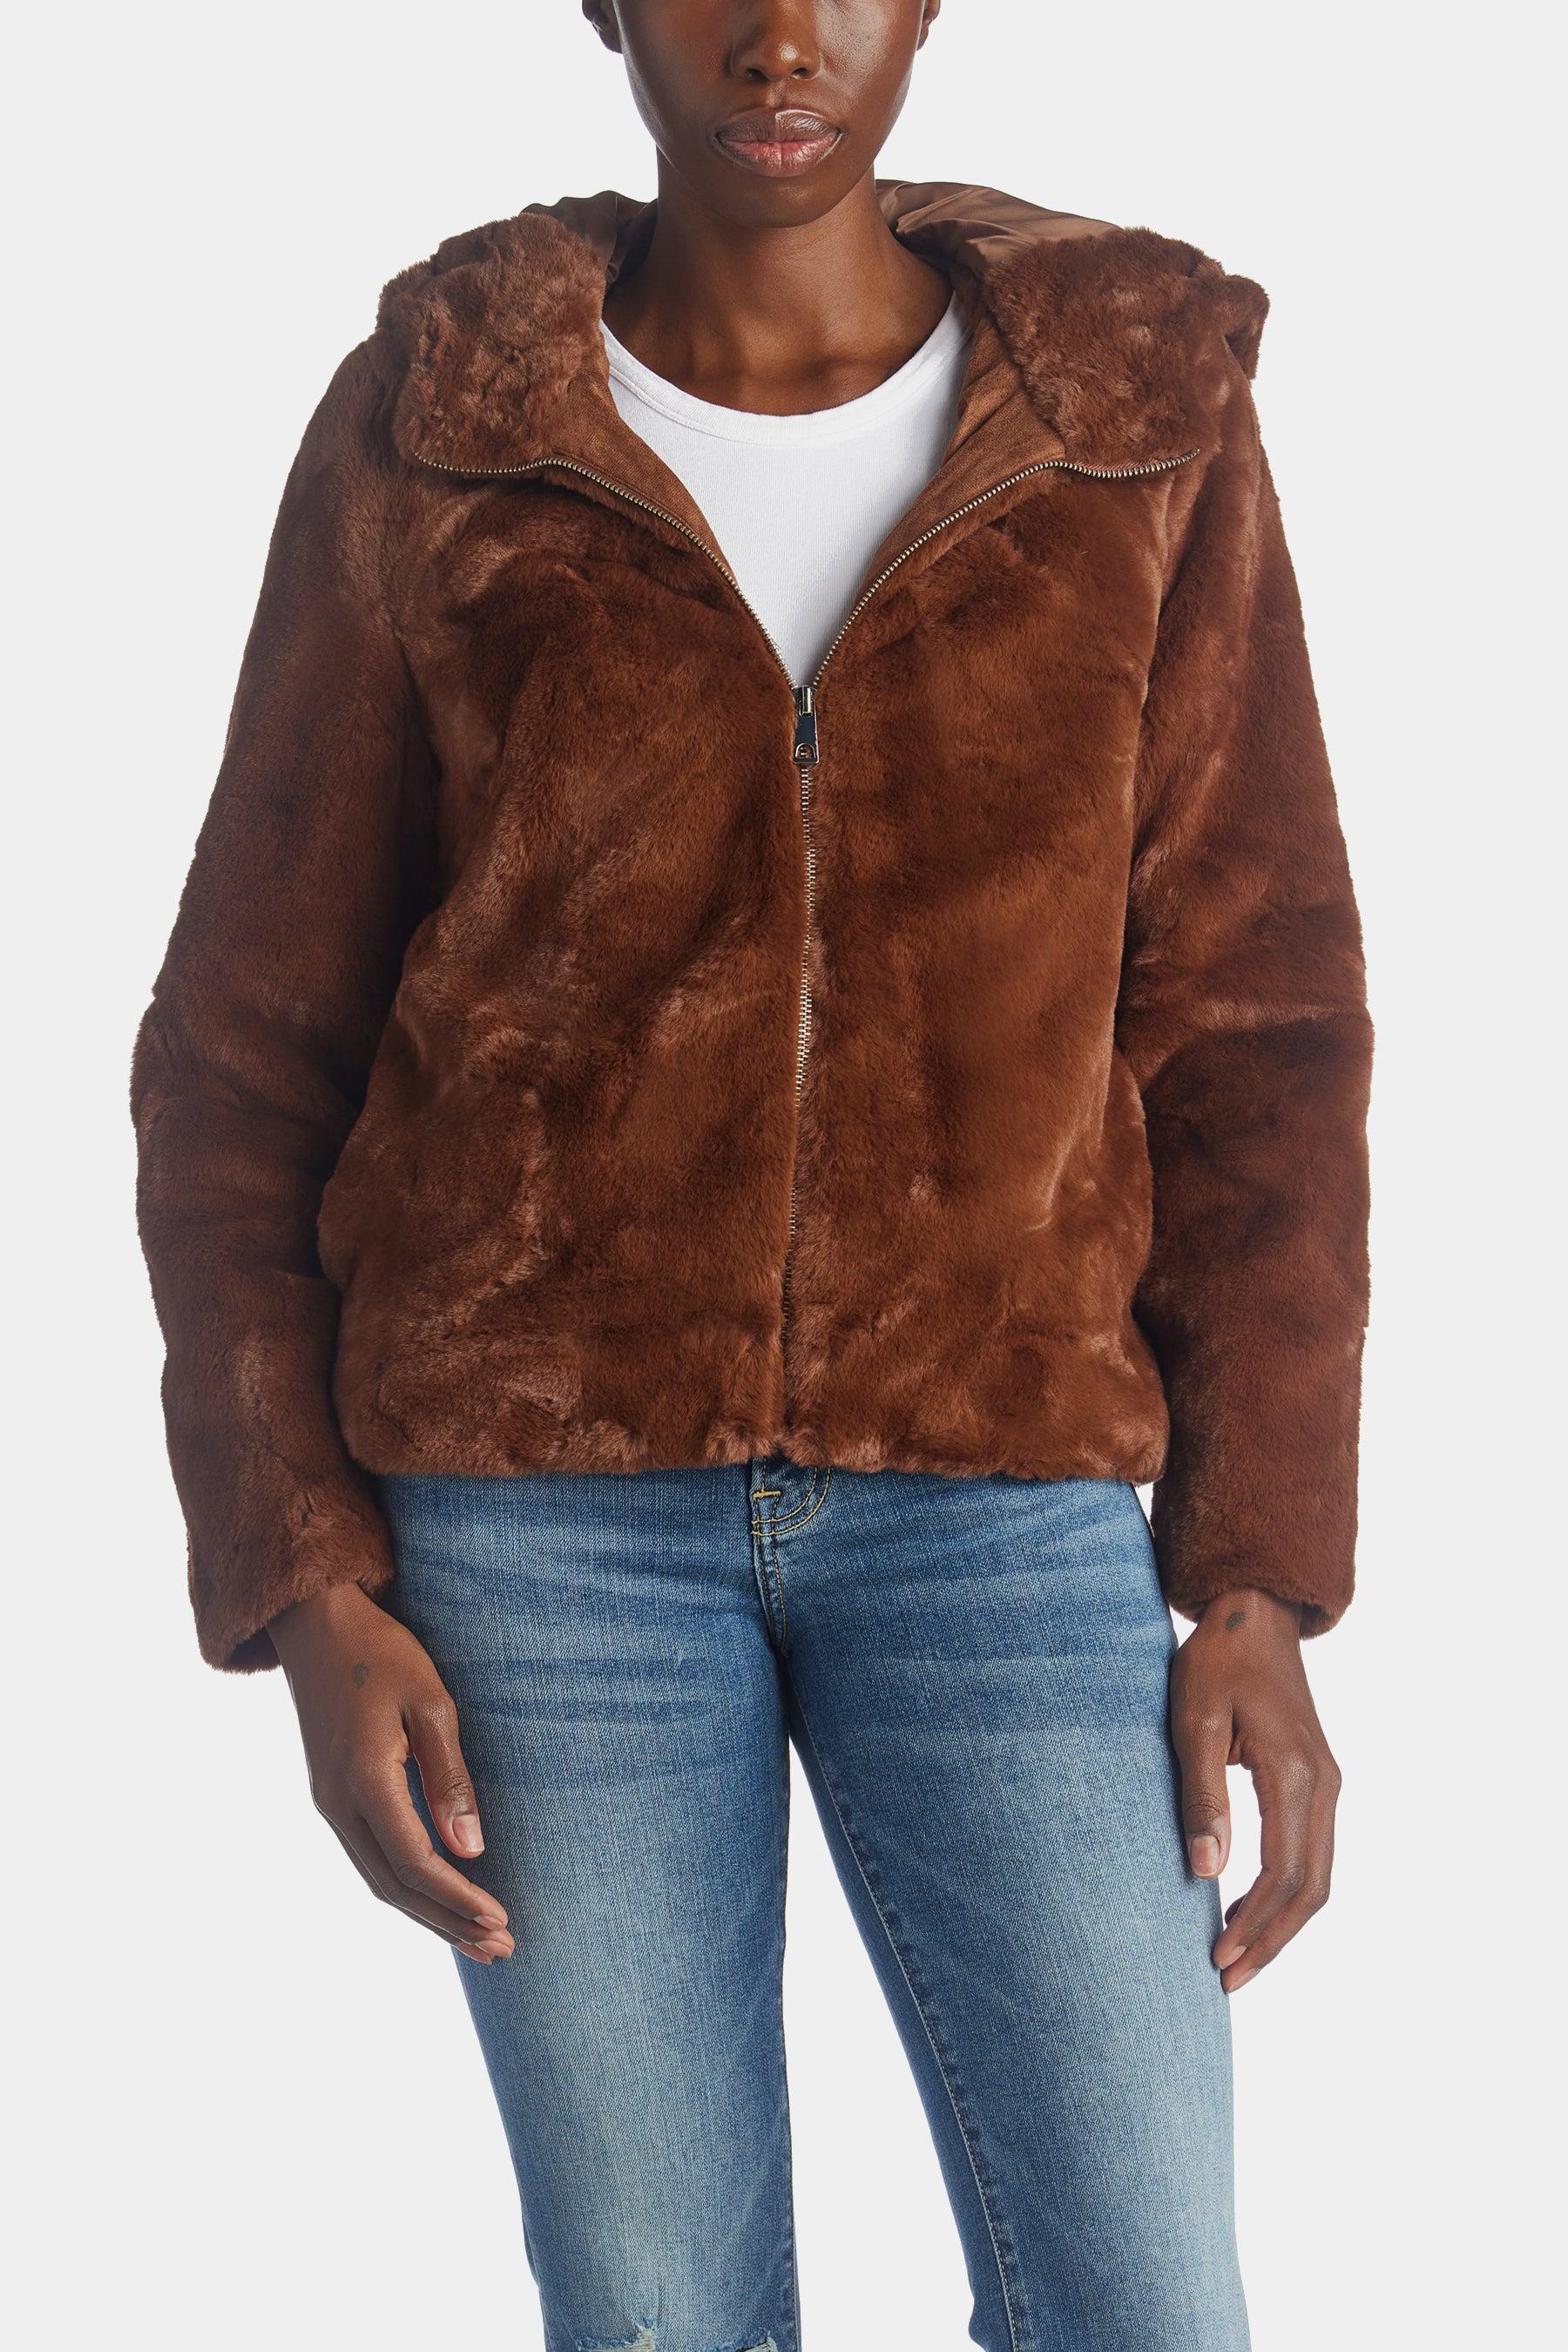 Vero Moda Short Faux Fur Jacket in Brown | Lyst